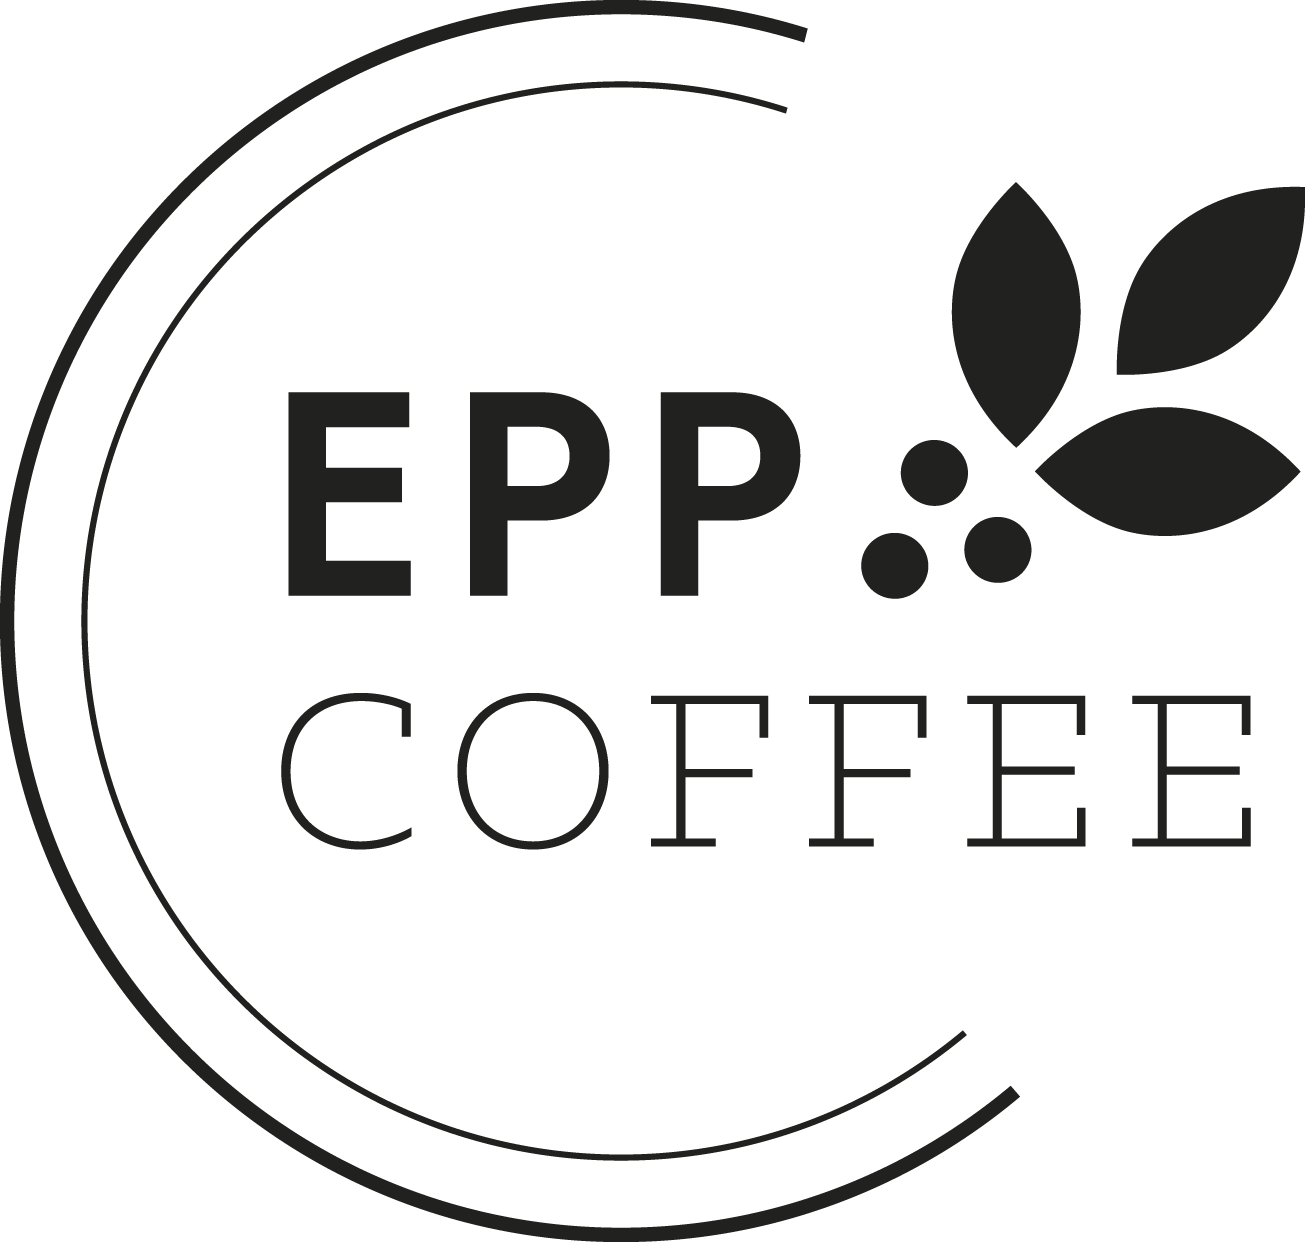 EPP Coffee Logo